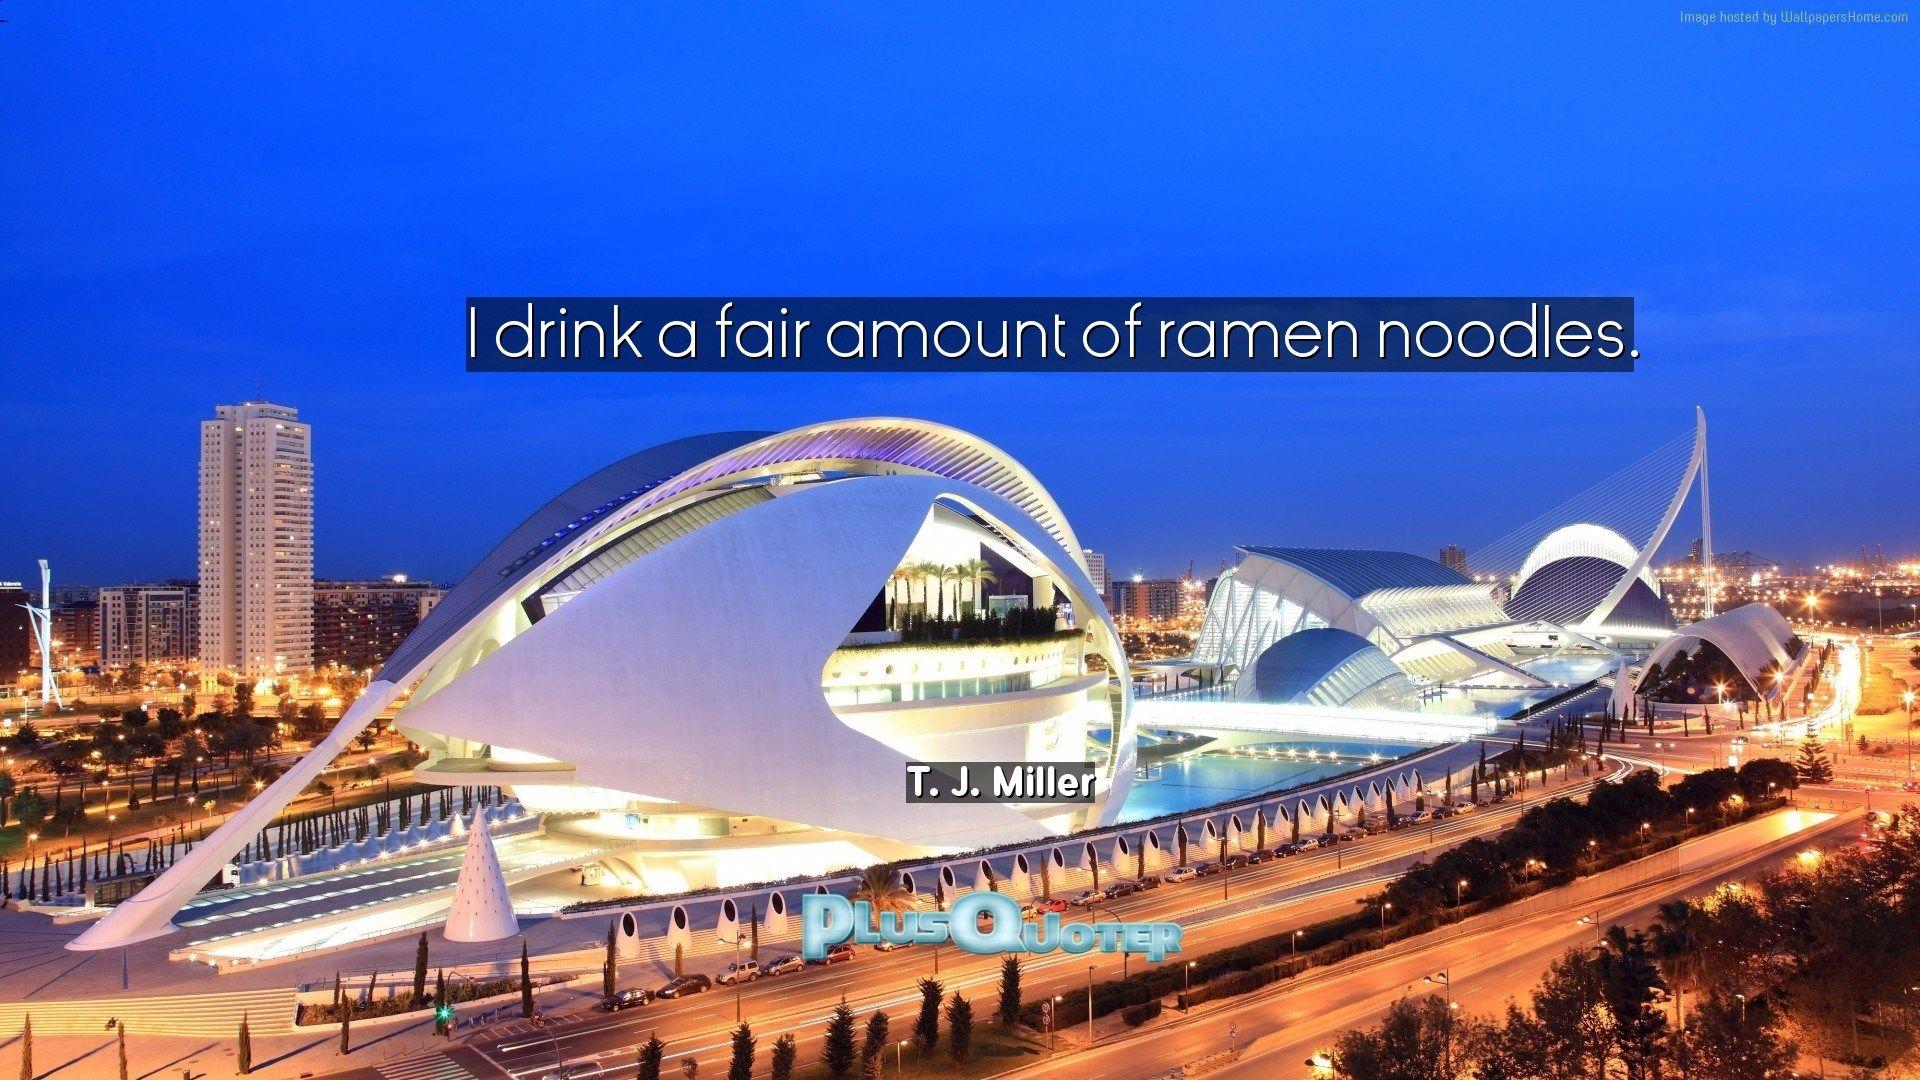 I drink a fair amount of ramen noodles- T. J. Miller. PlusQuoter